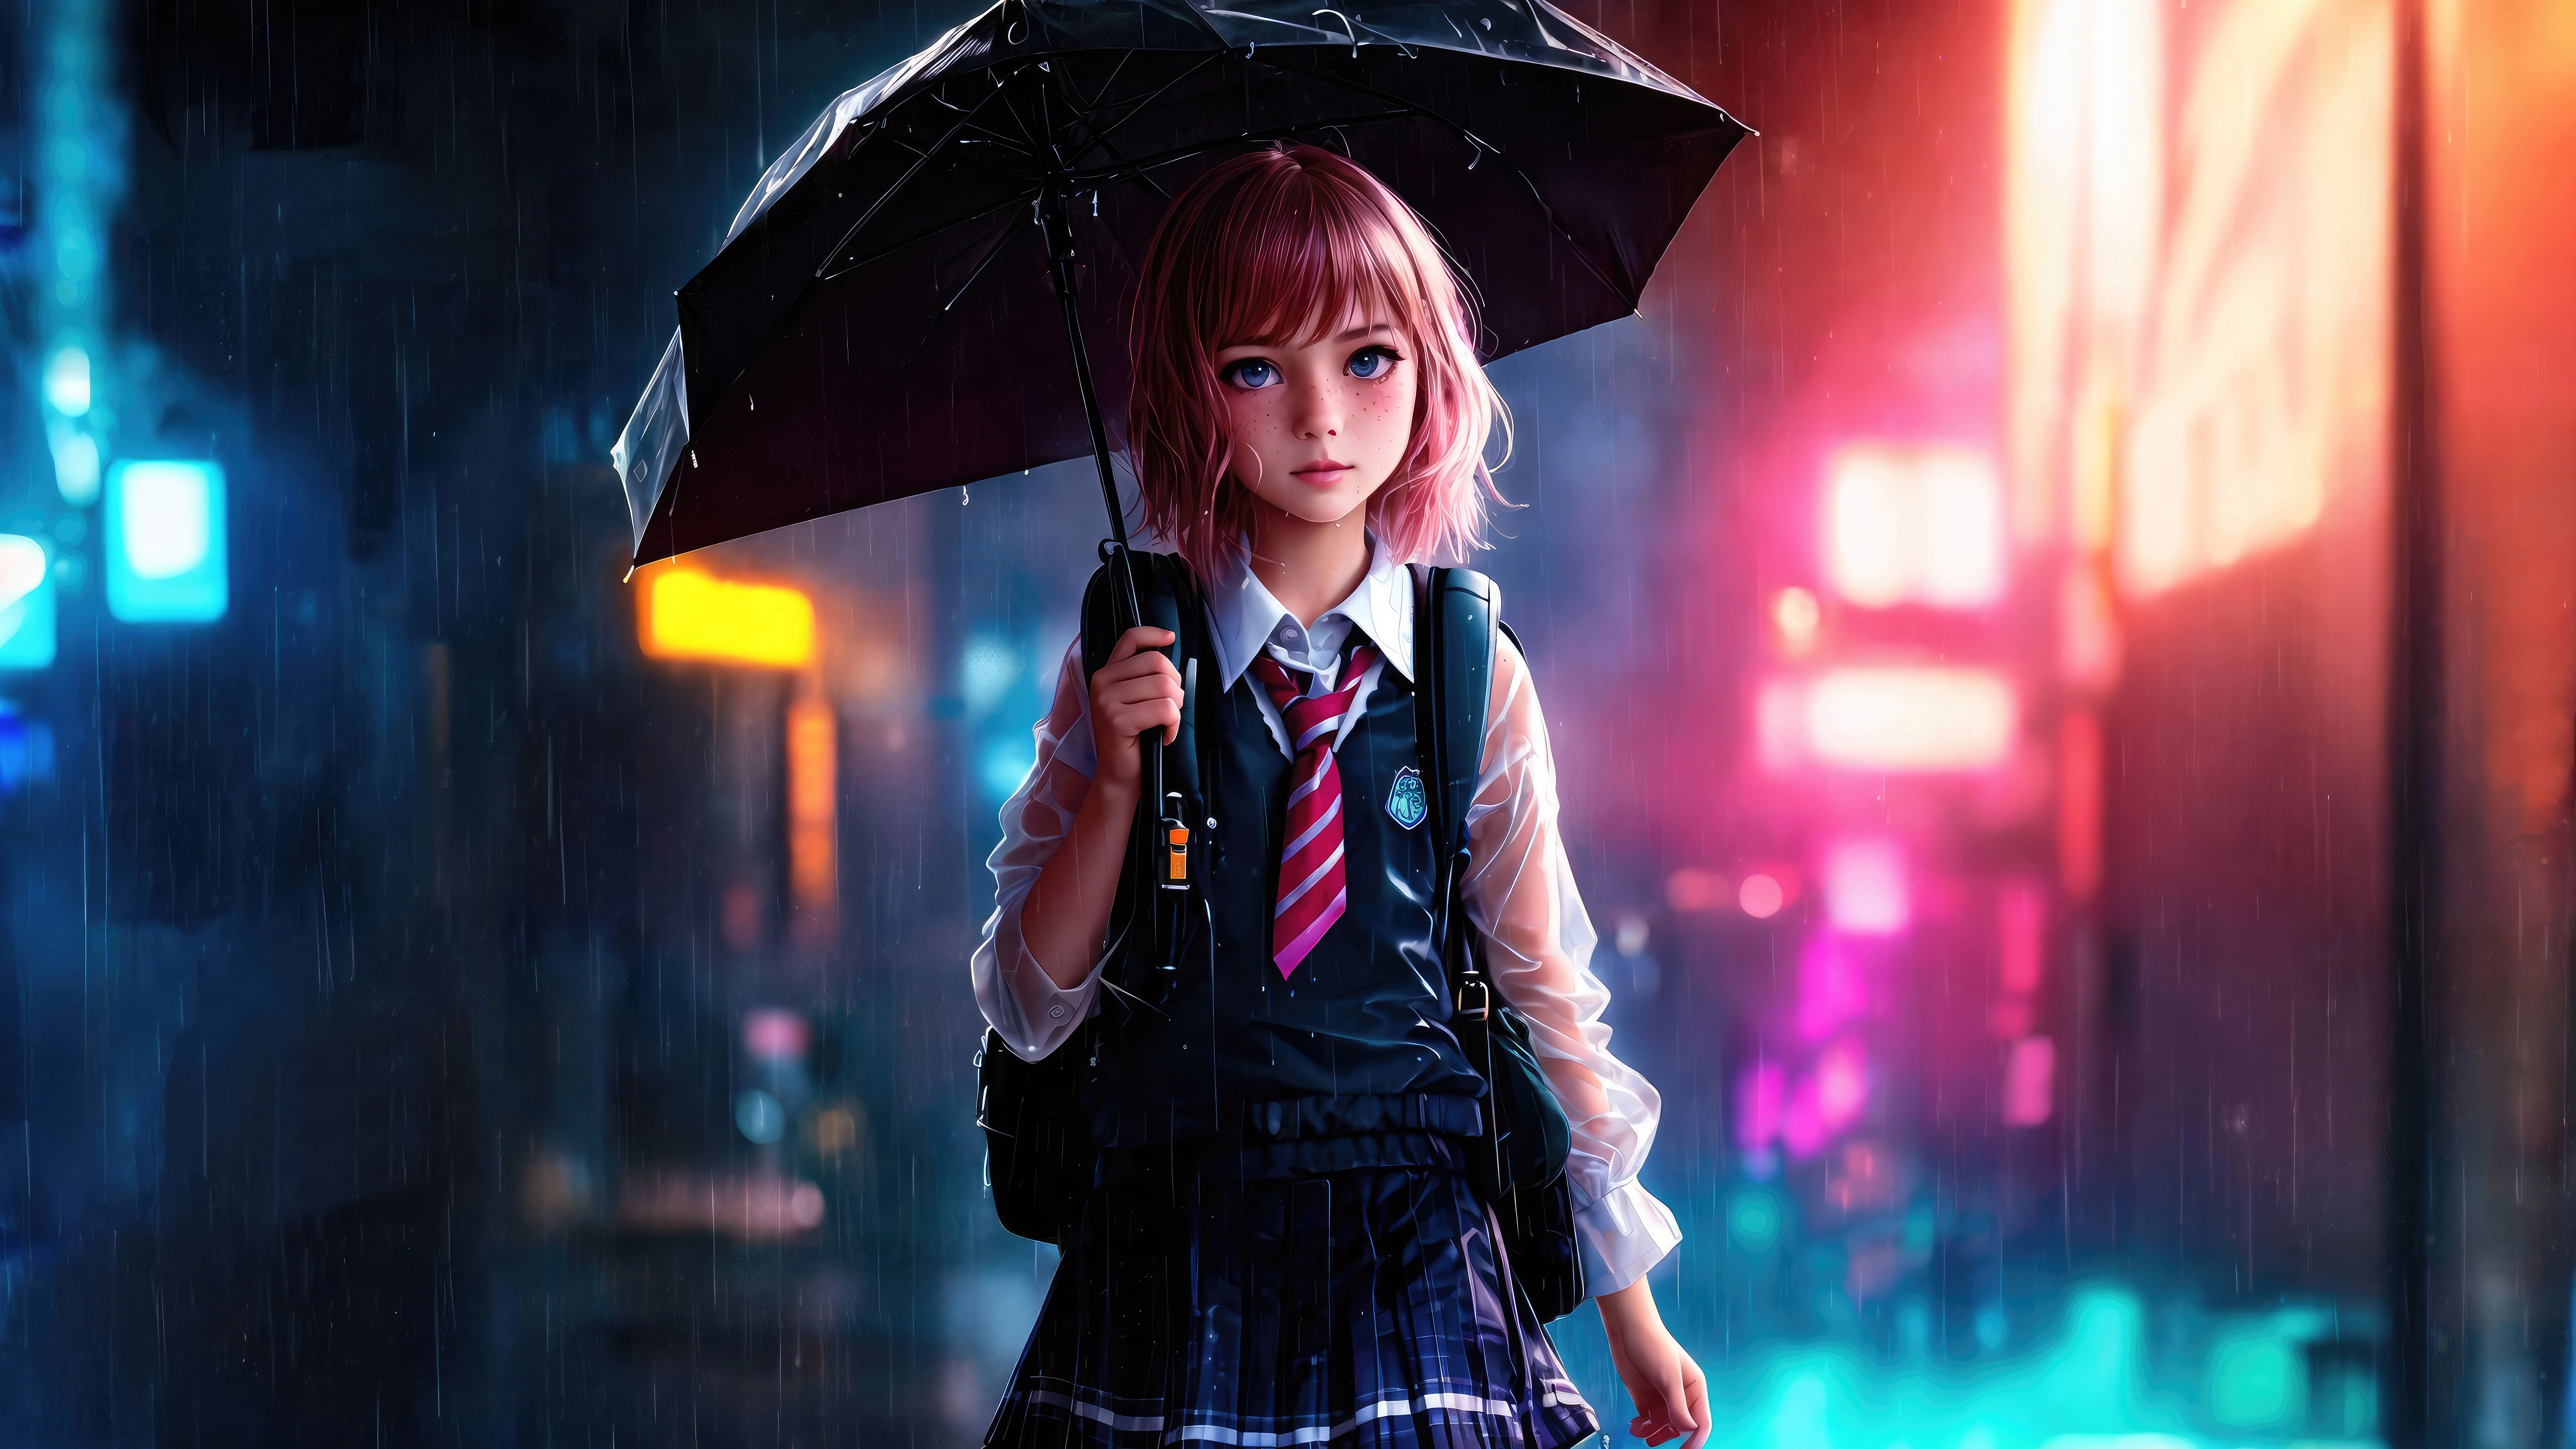 little girl with umbrella rain coming back from school 55.jpg